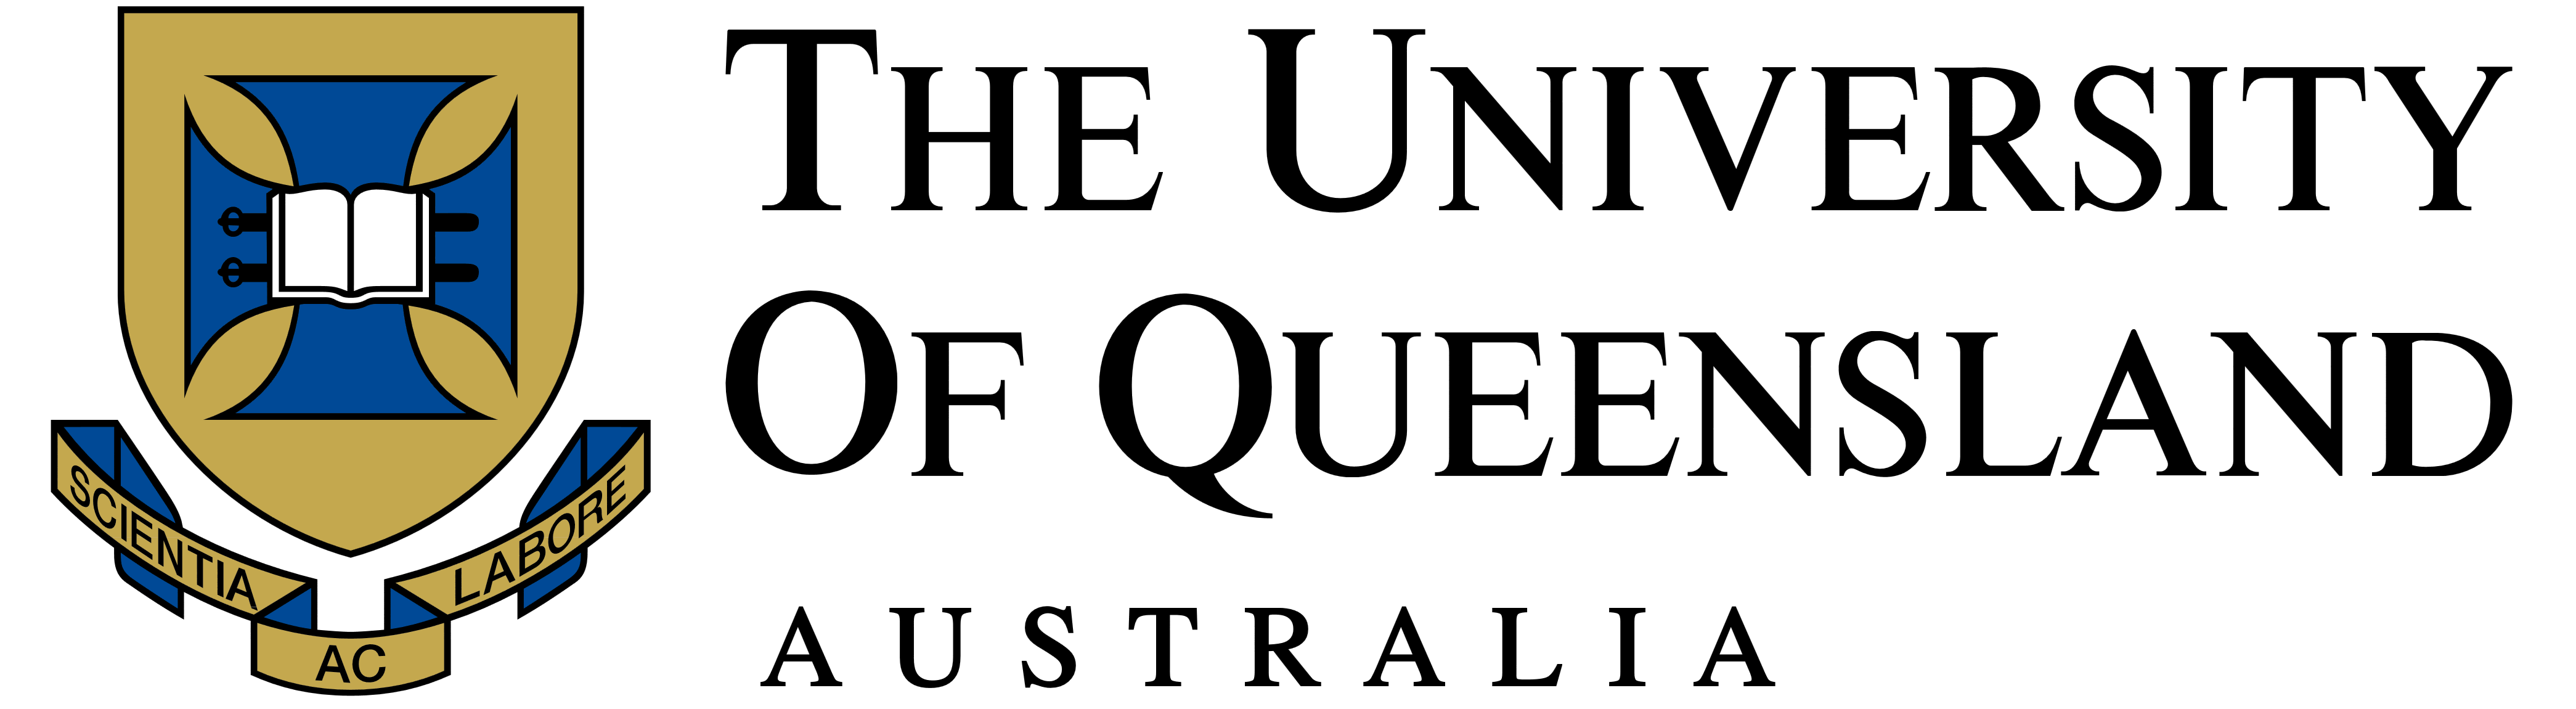 The University of Queensland logo, logotype